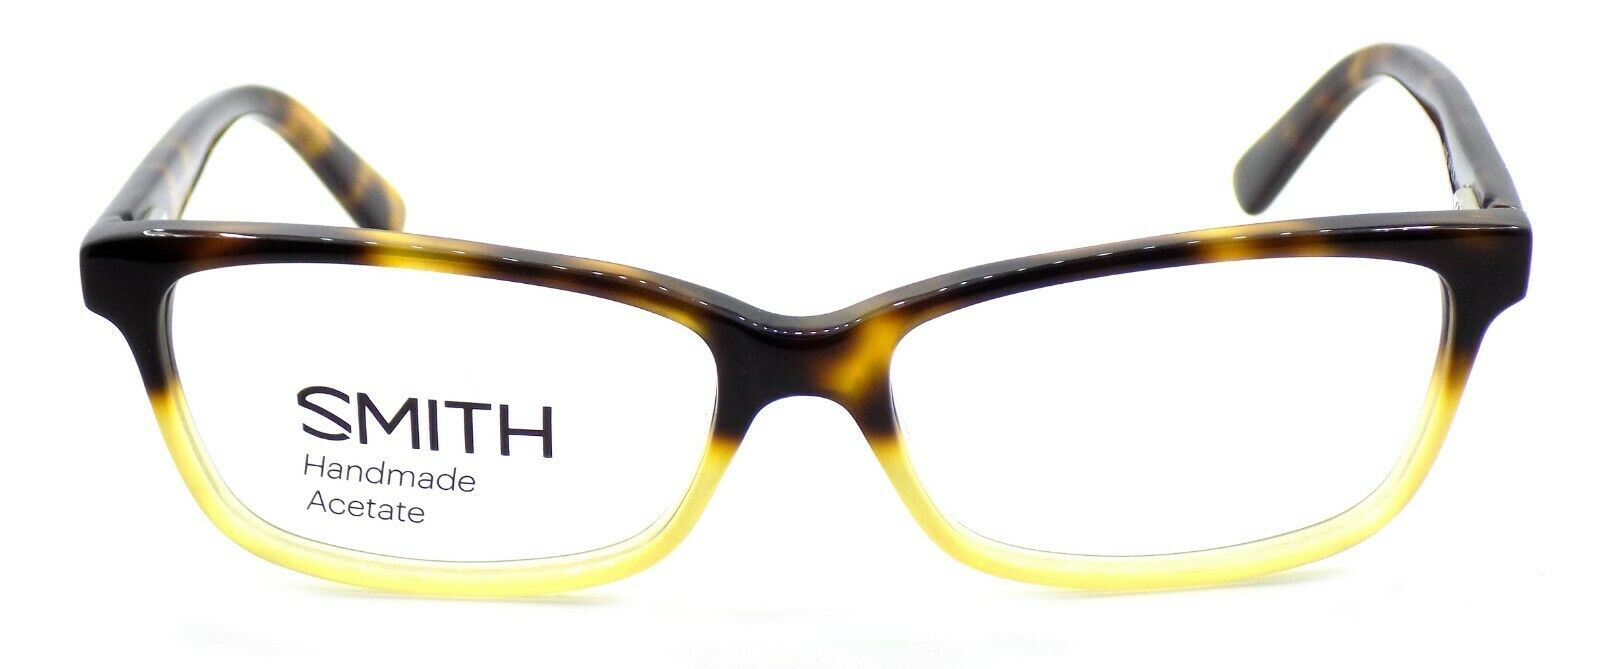 2-SMITH Optics Daydream G36 Women's Eyeglasses Frames 53-15-130 Tortoise Split-716737723081-IKSpecs